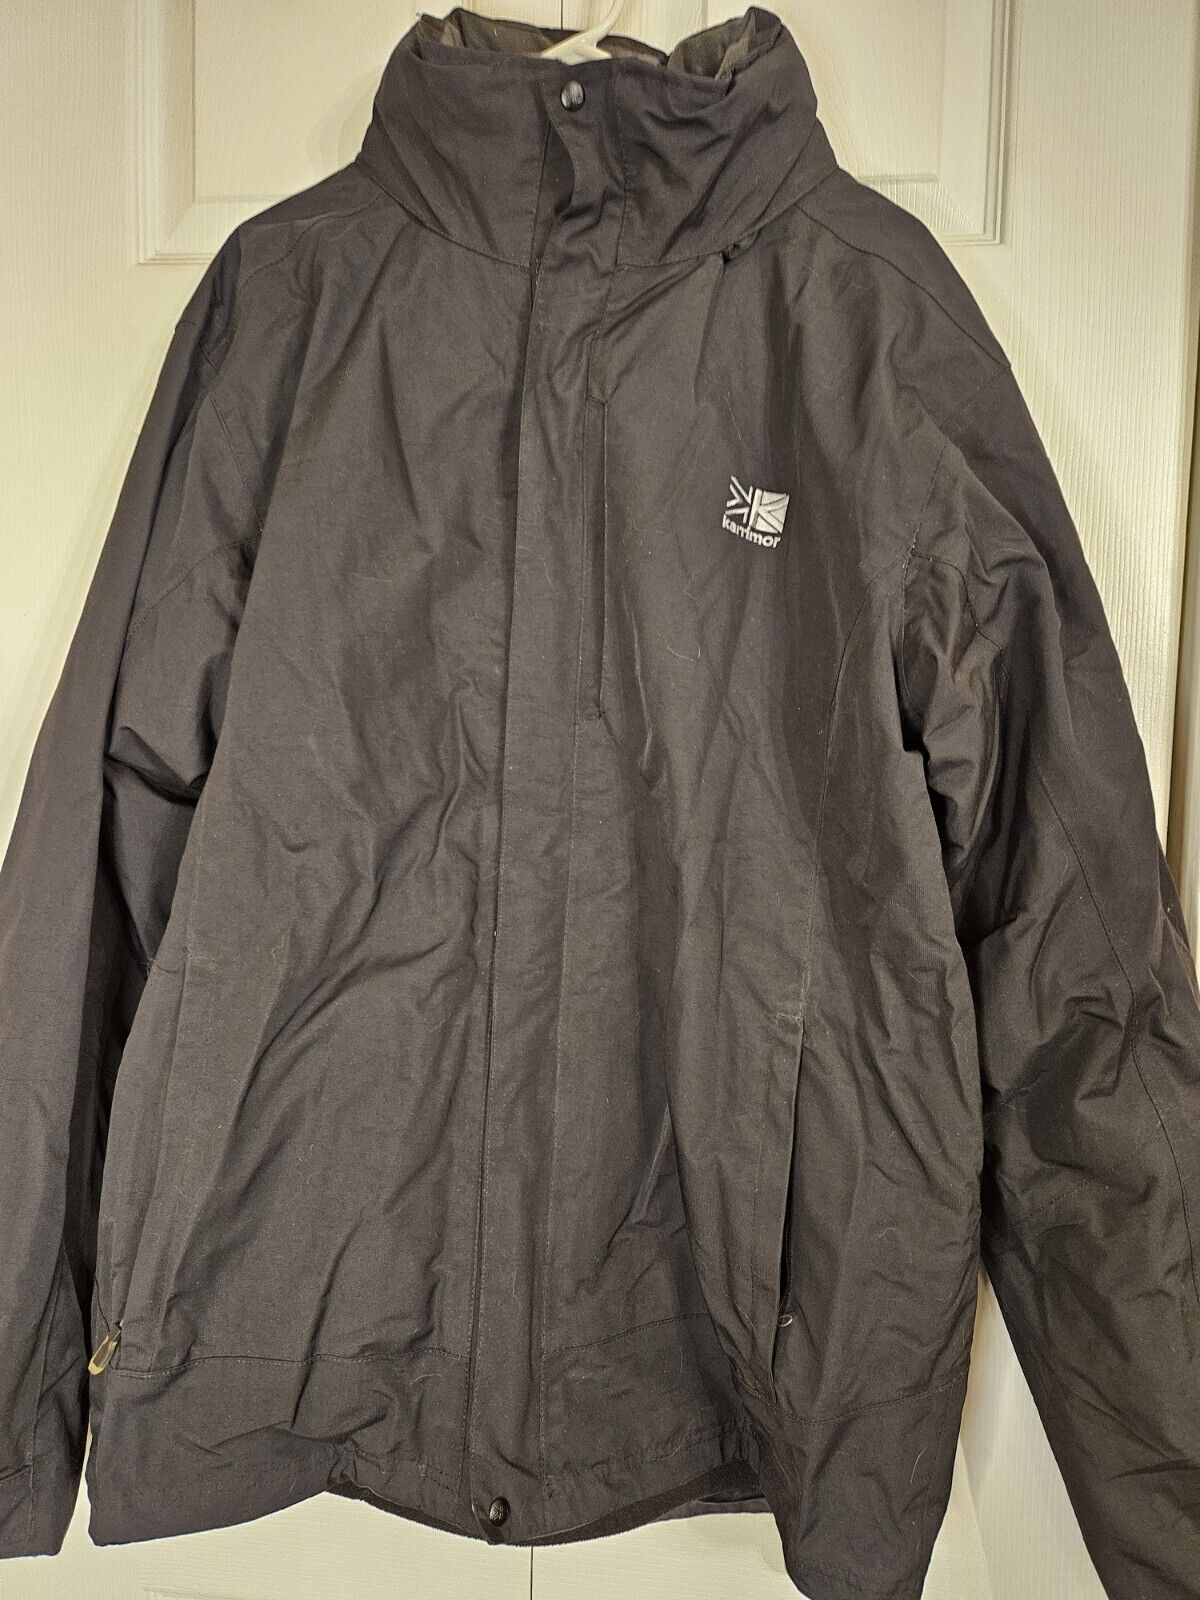 Karrimor Men's XL Winter Coat Jacket 3 In 1 Hooded Insulated Black